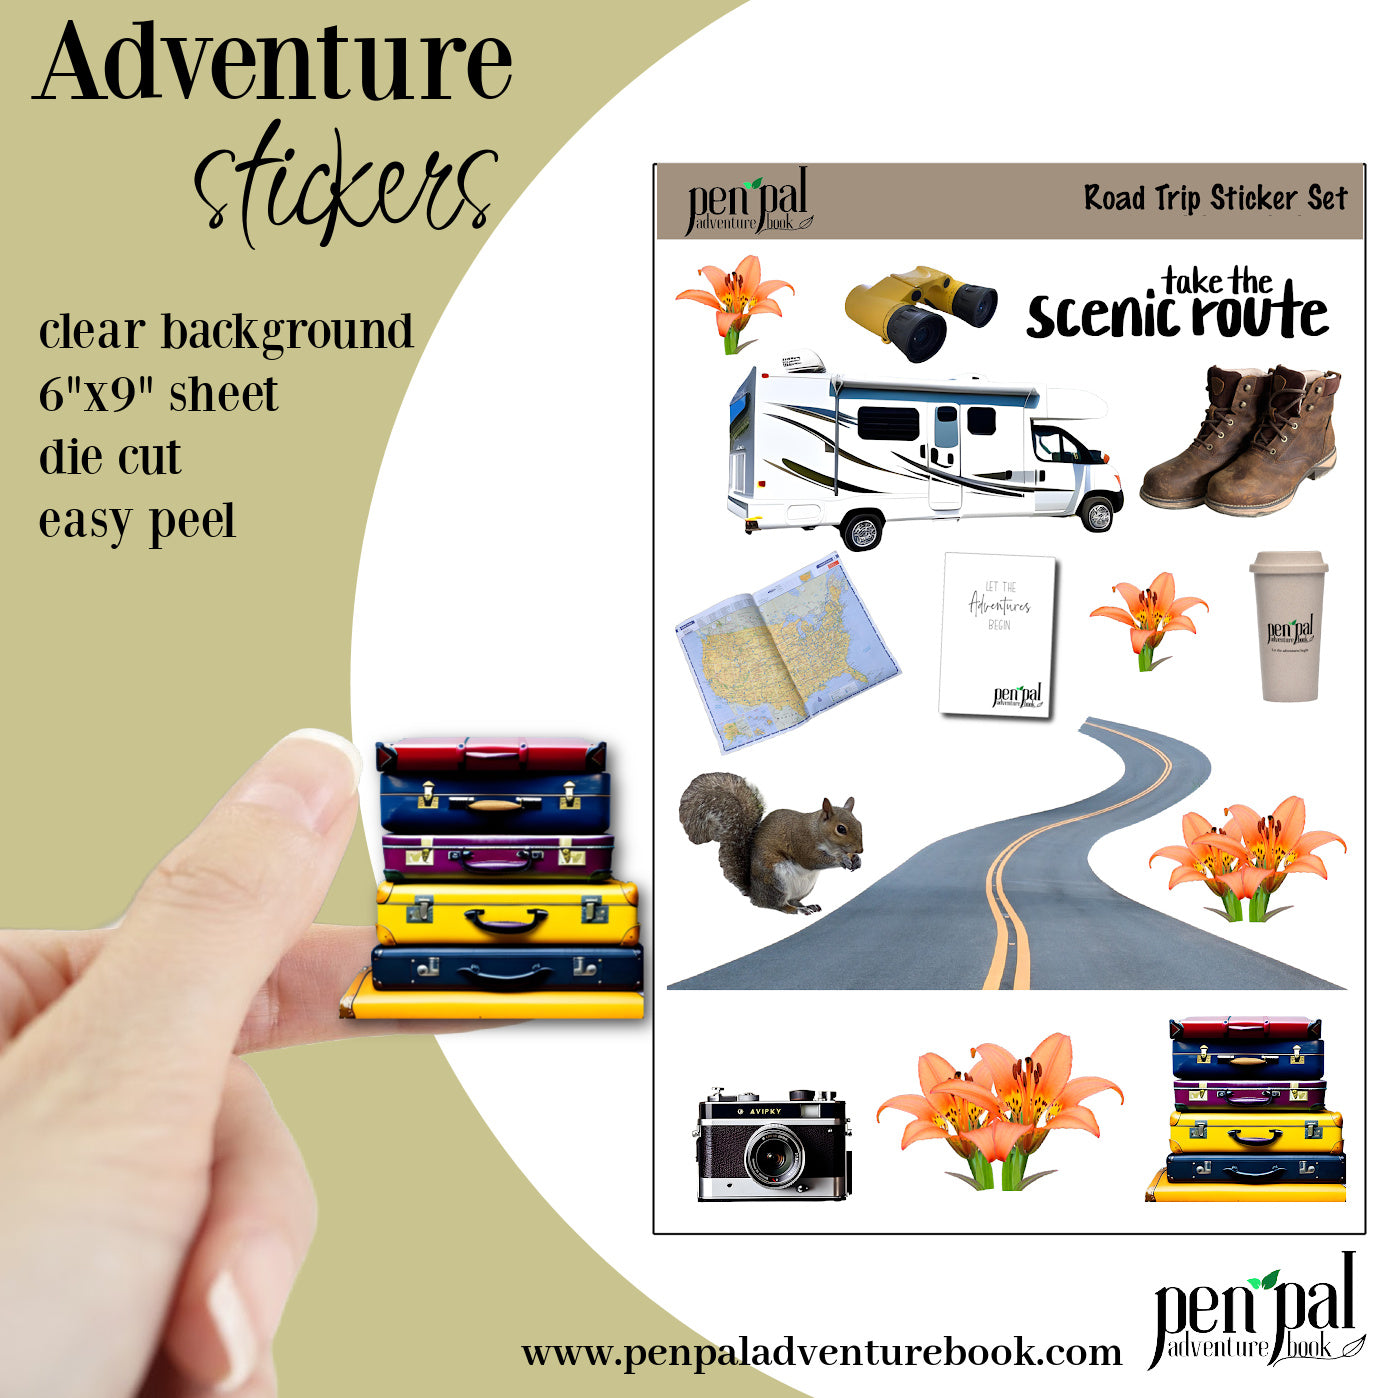 Pen Pal Adventure Book with Sticker Set - ROAD TRIP